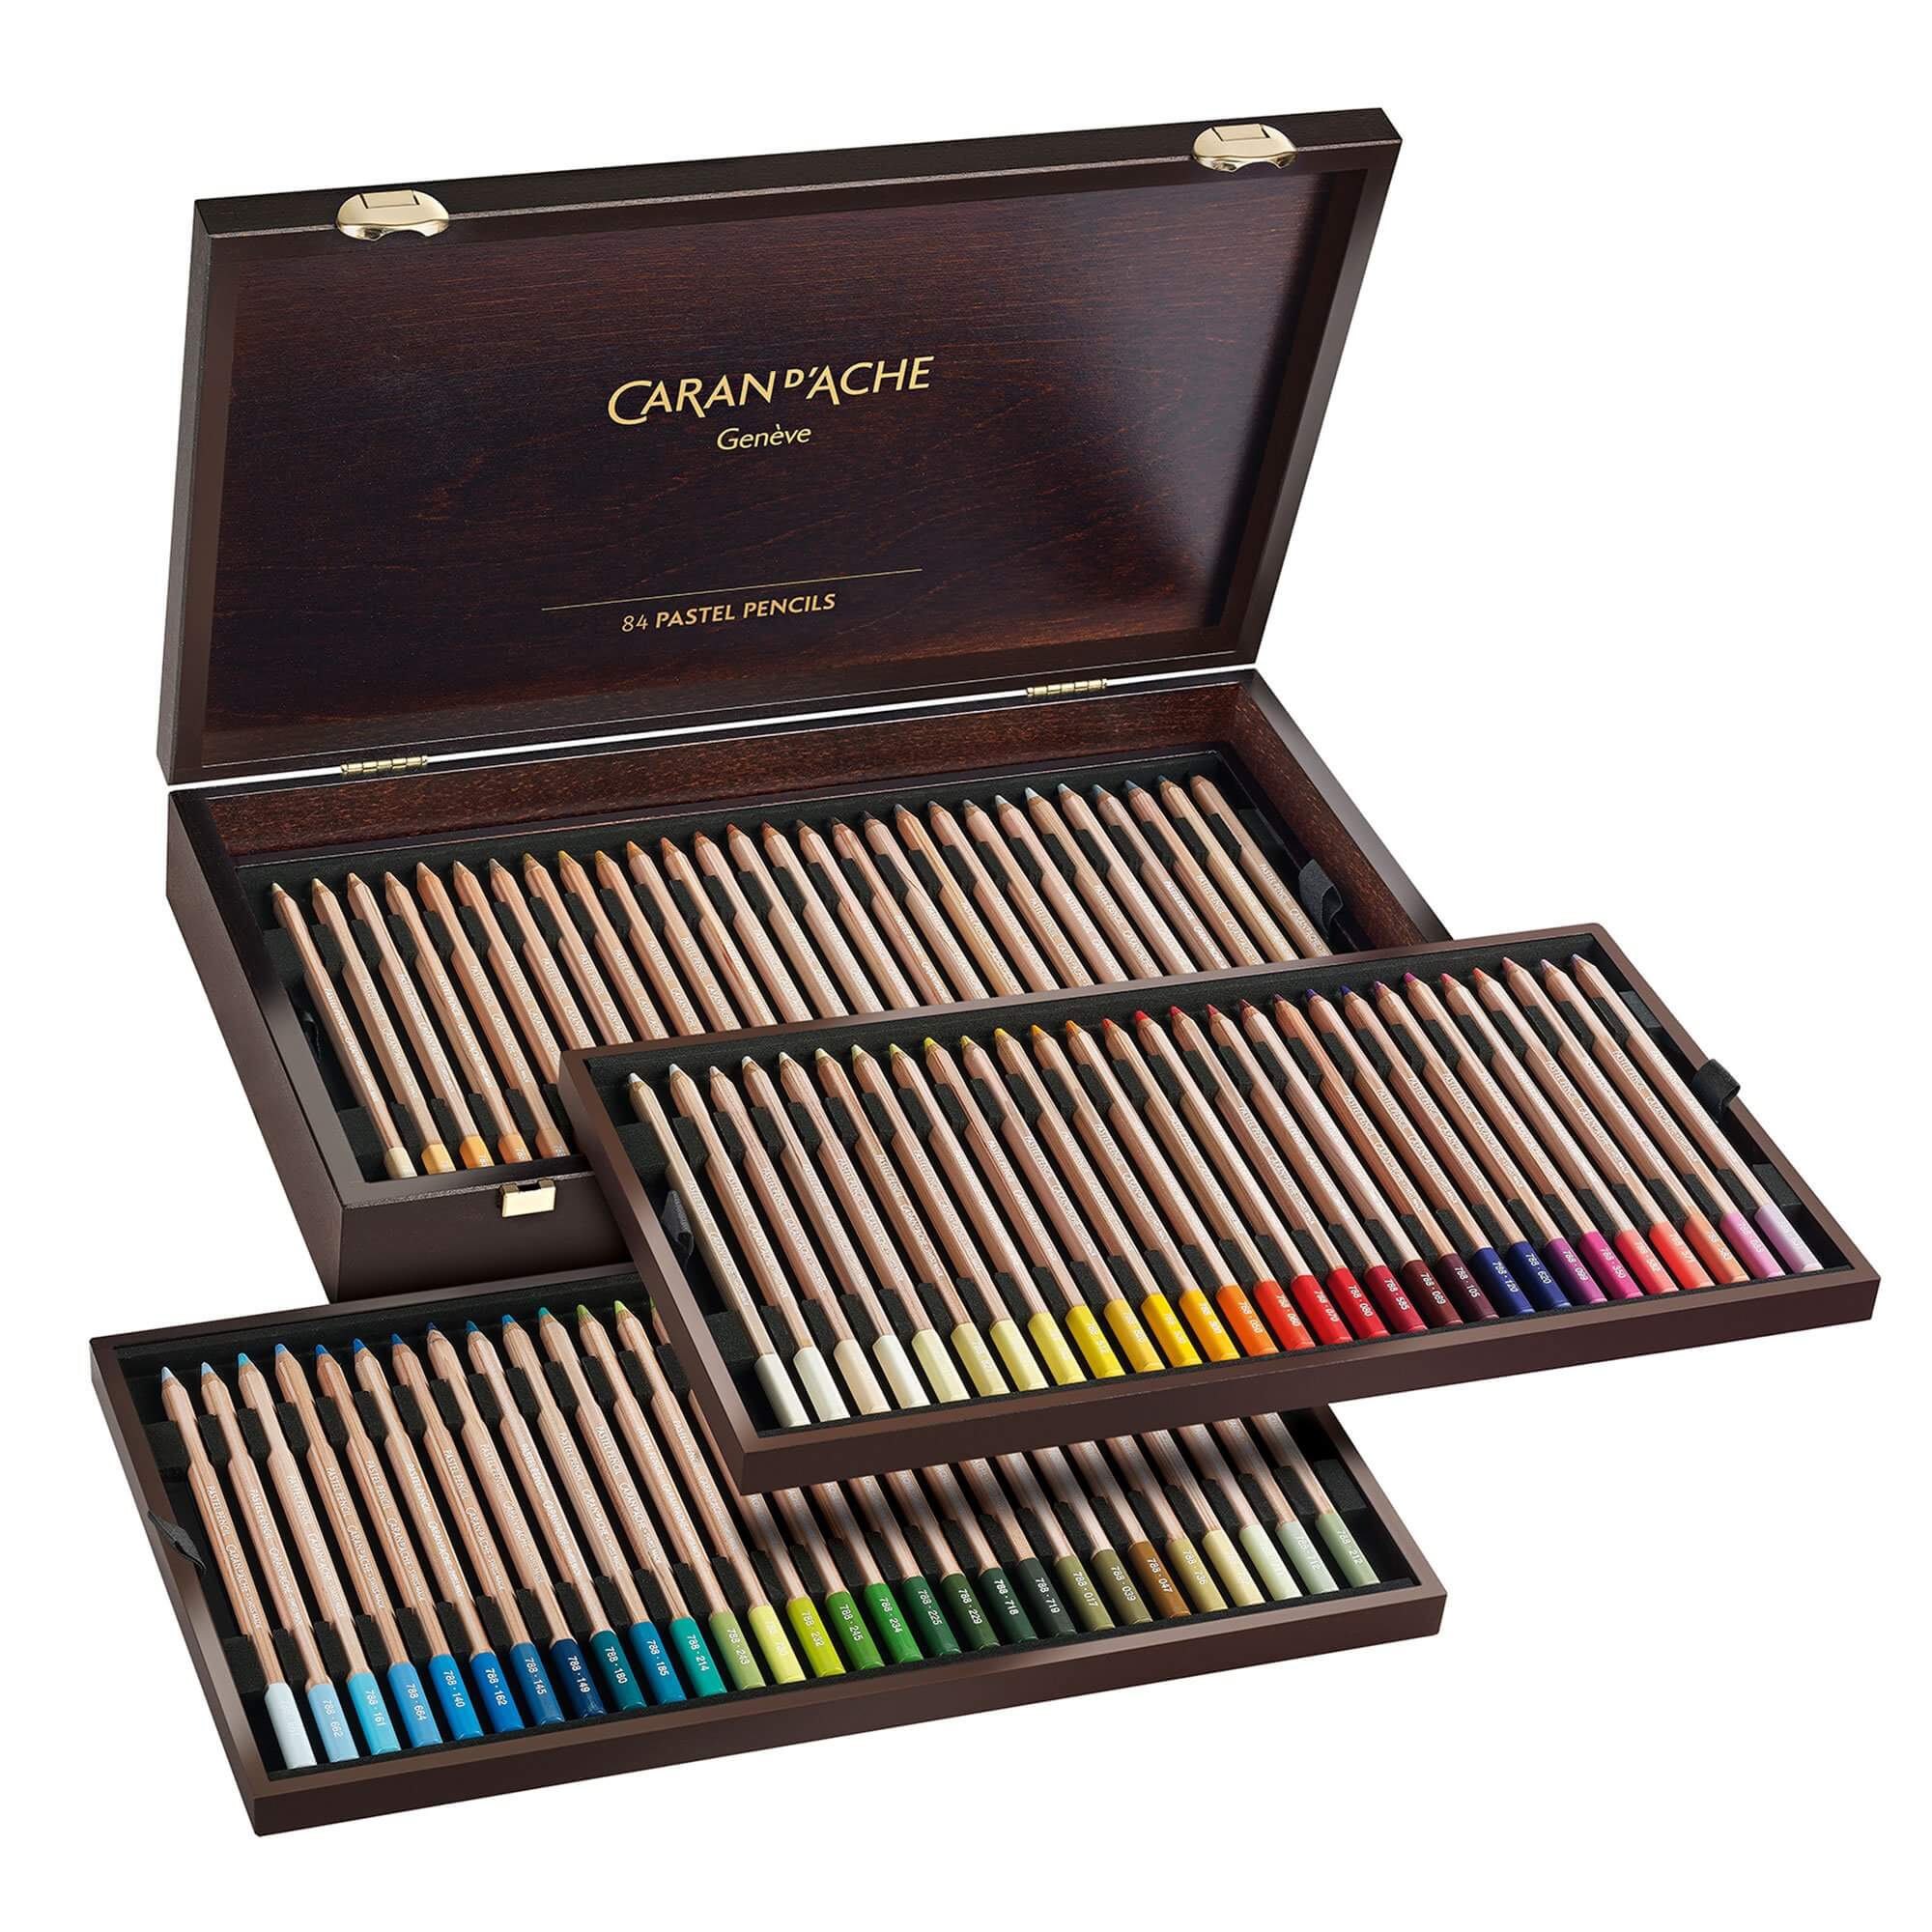 Caran d'Ache Dry Pastel Pencils Box of 84